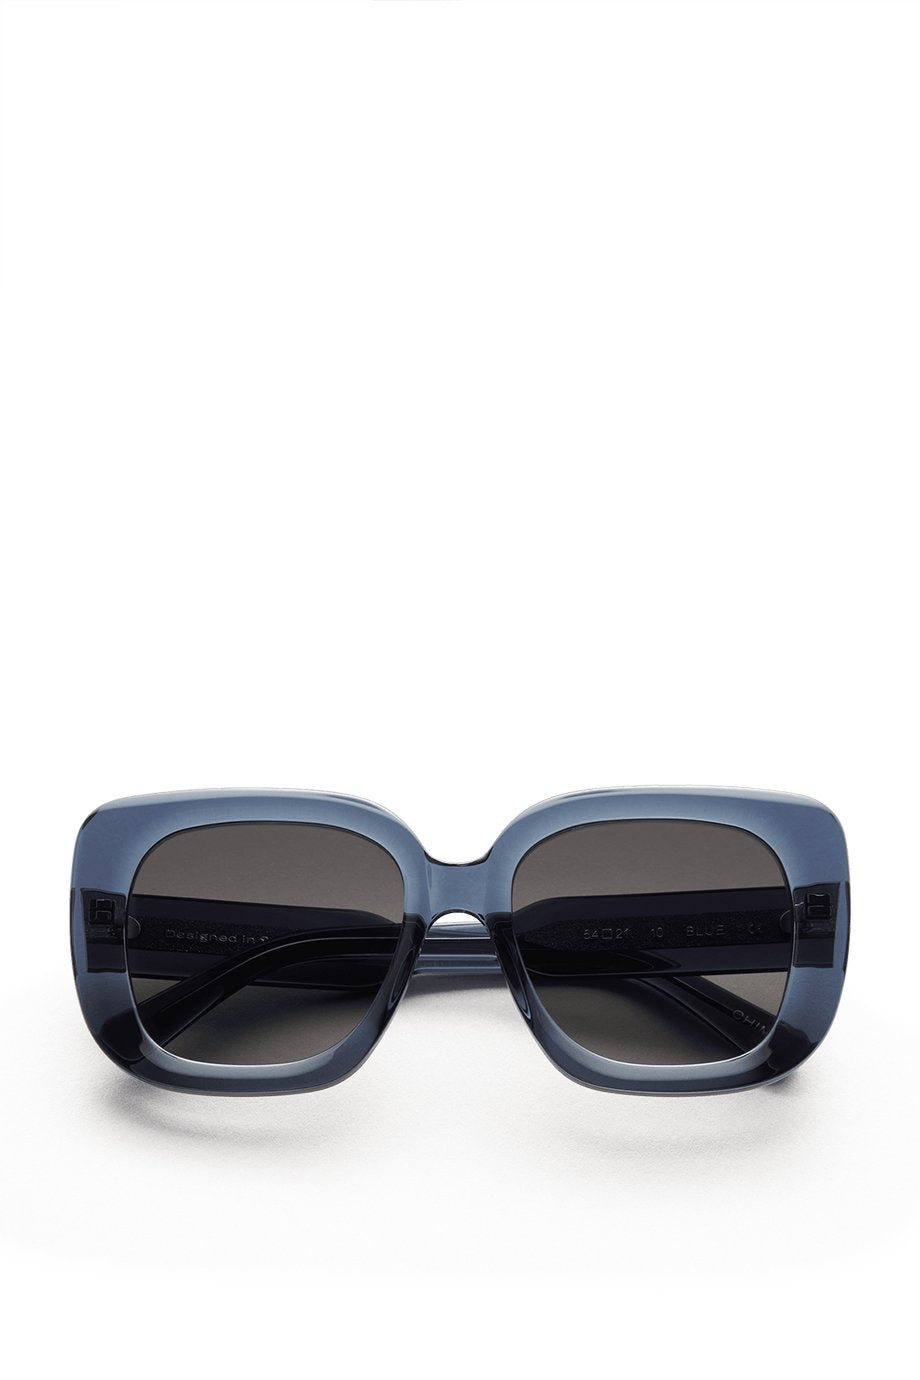 Chimi 10 Sunglasses - Blue